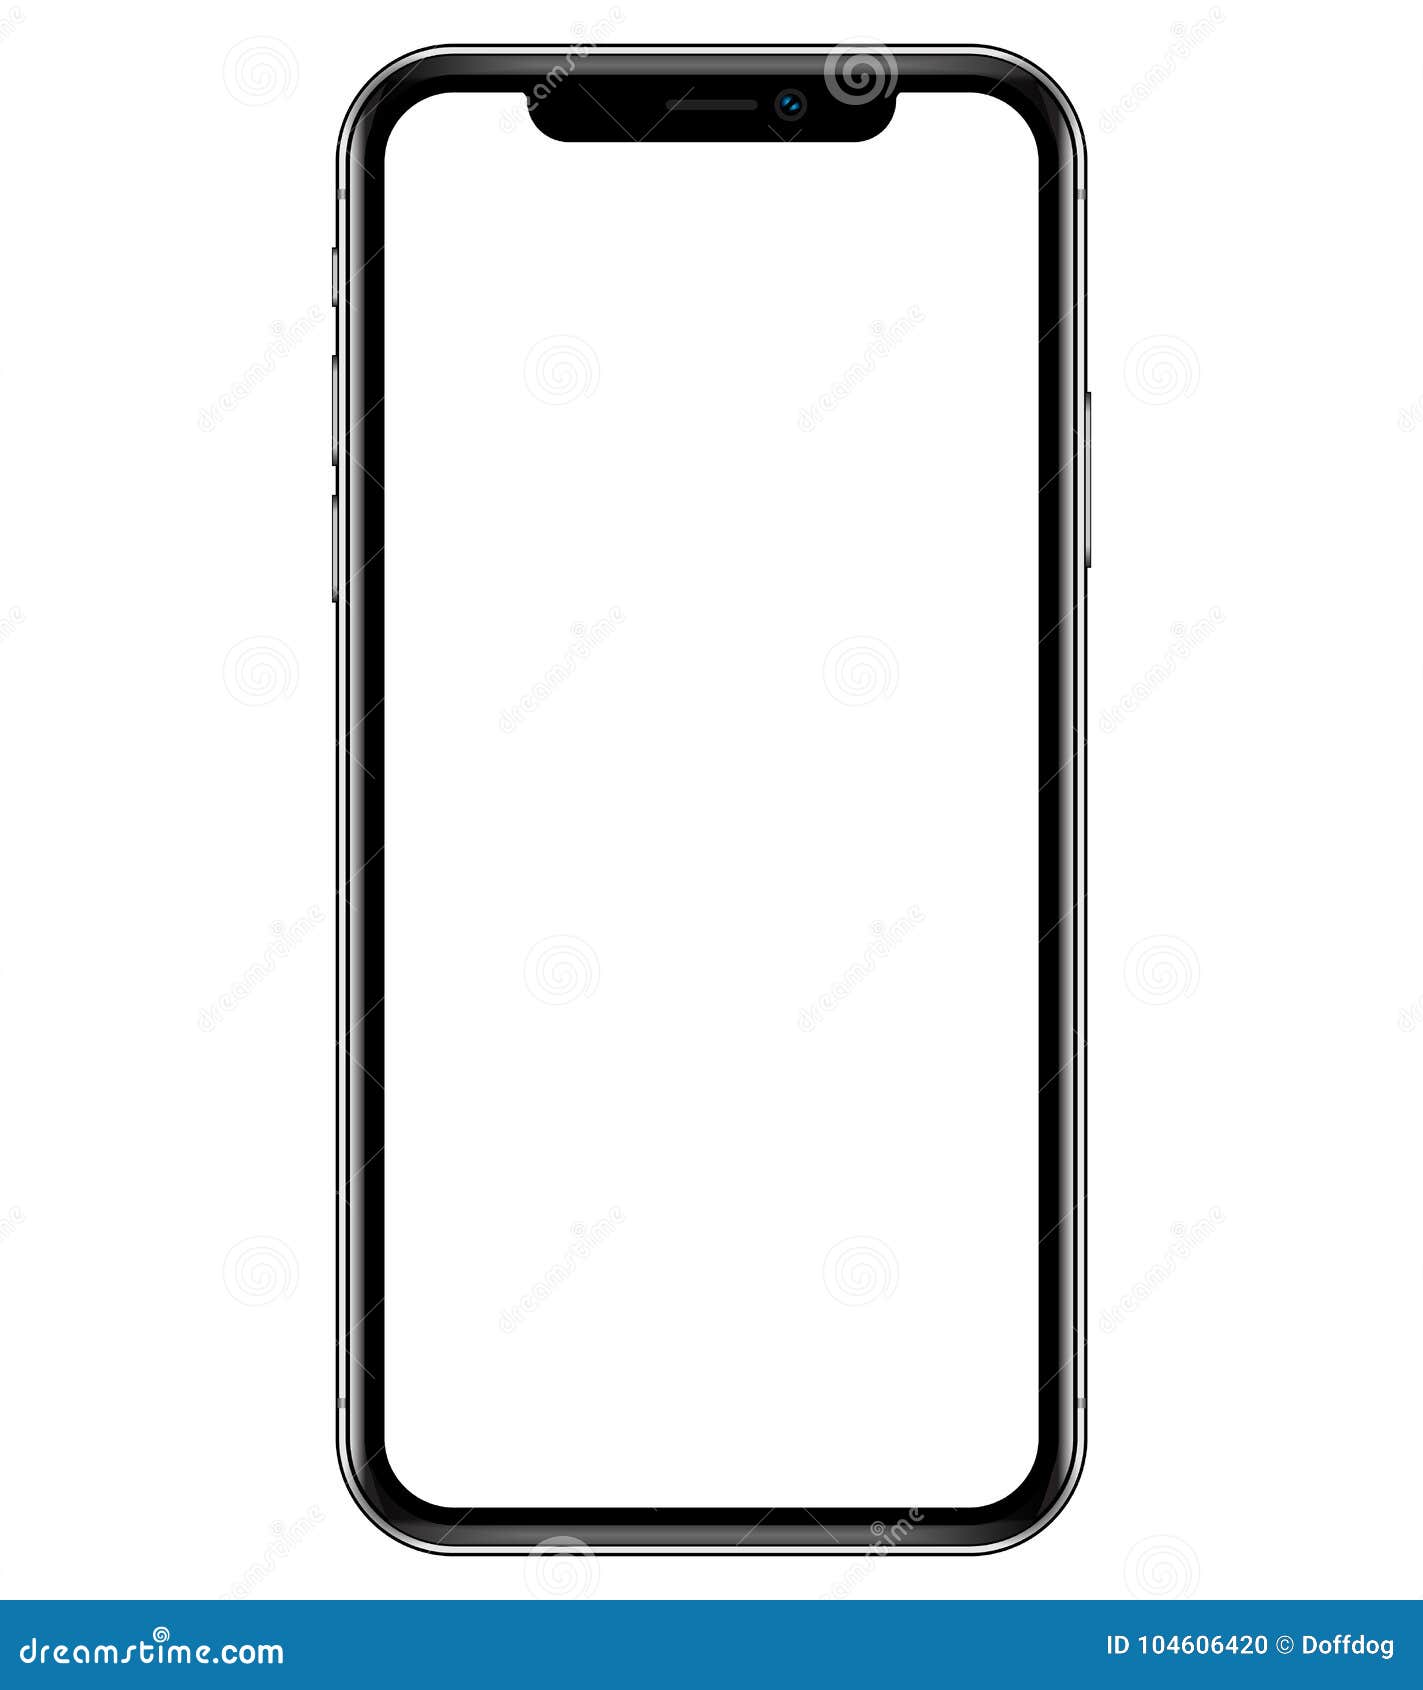 apple iphone smartphone template mockup 